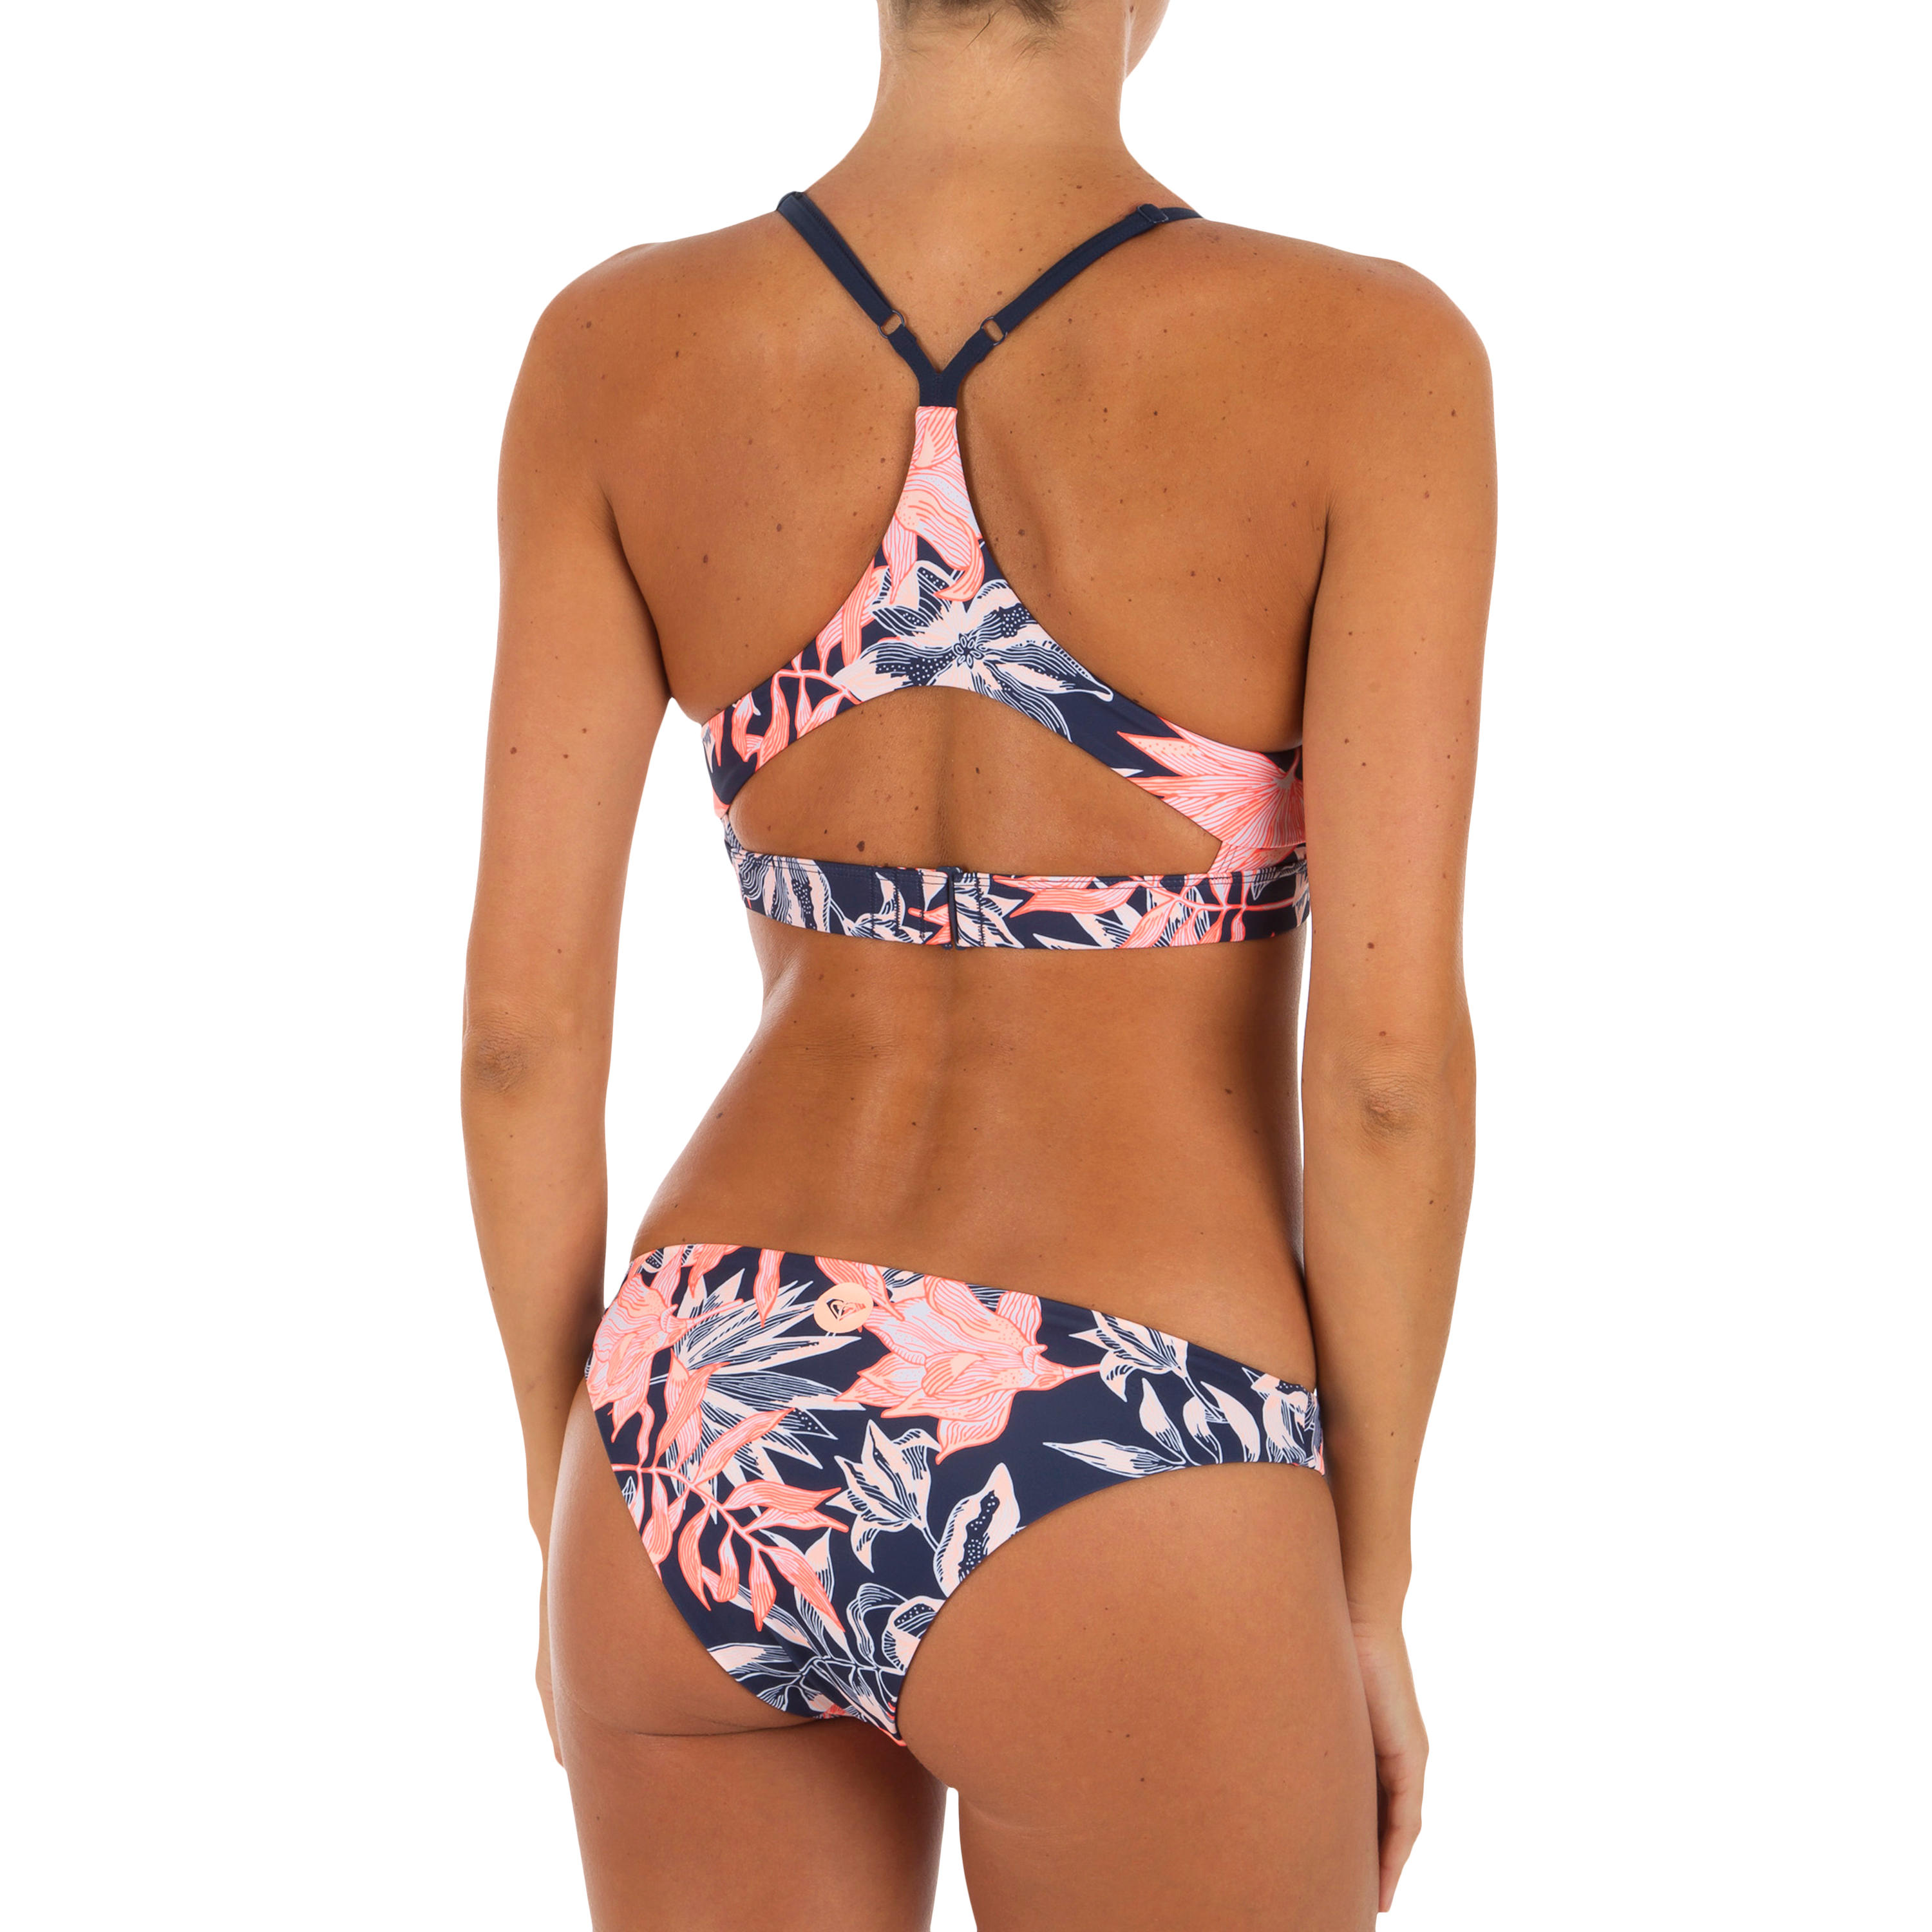 Women's briefs swimsuit bottoms VIVIAN Roxy 6/7